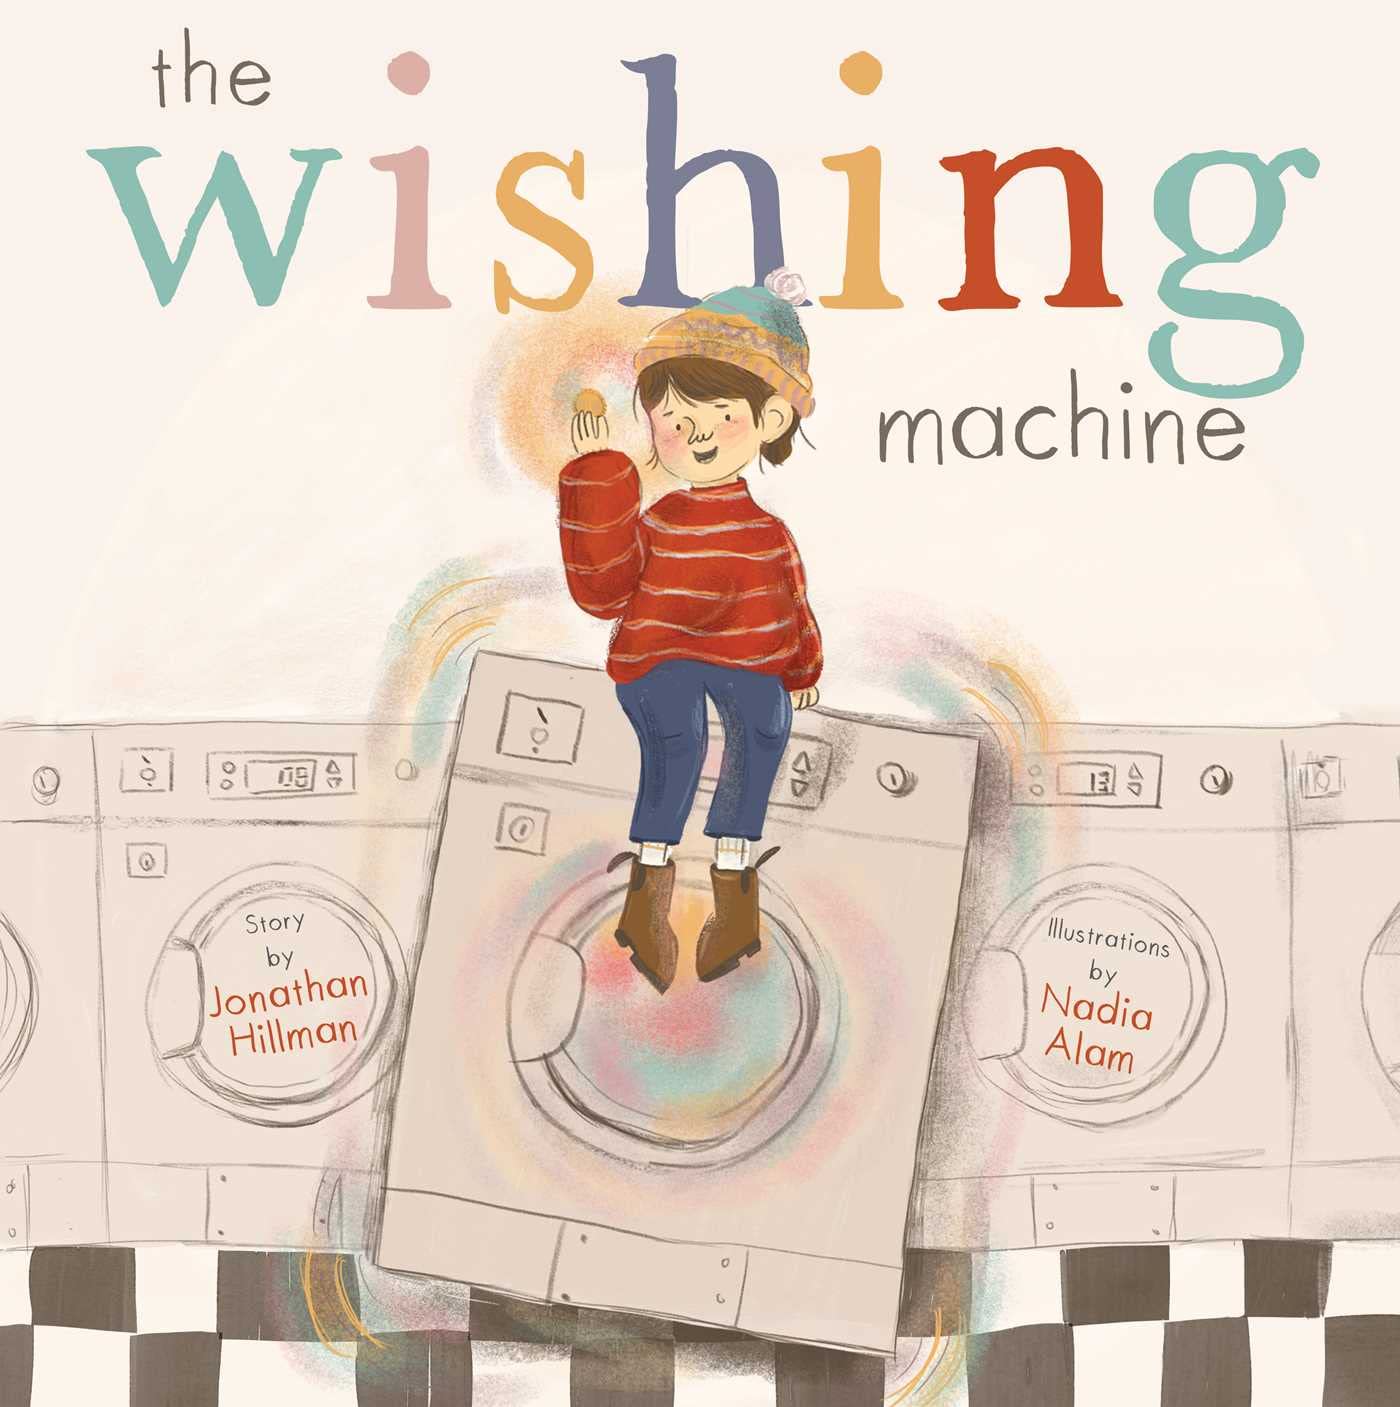 Image for "The Wishing Machine"